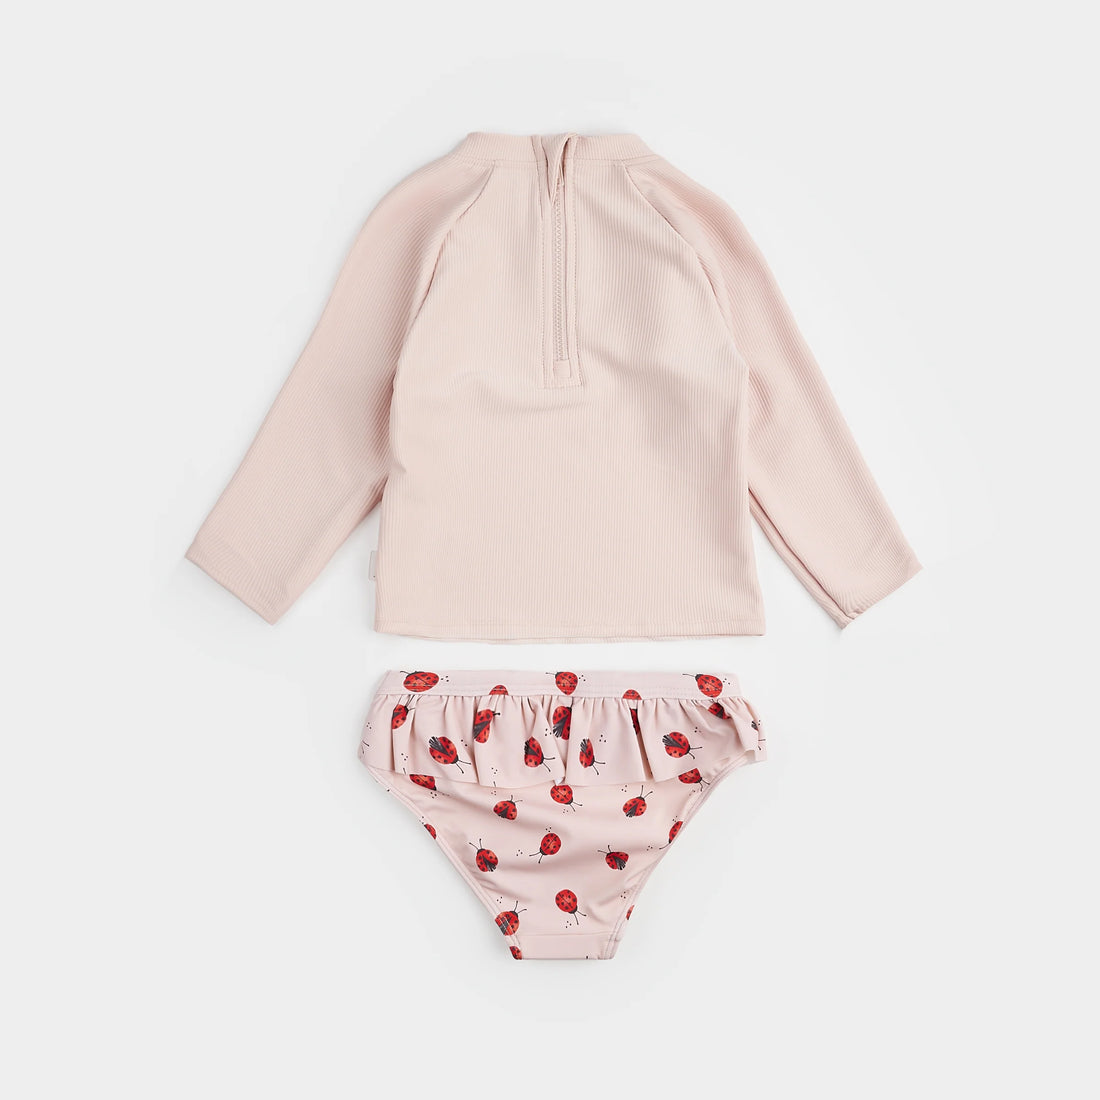 pink rashguard top and ladybug bottom baby swimsuit